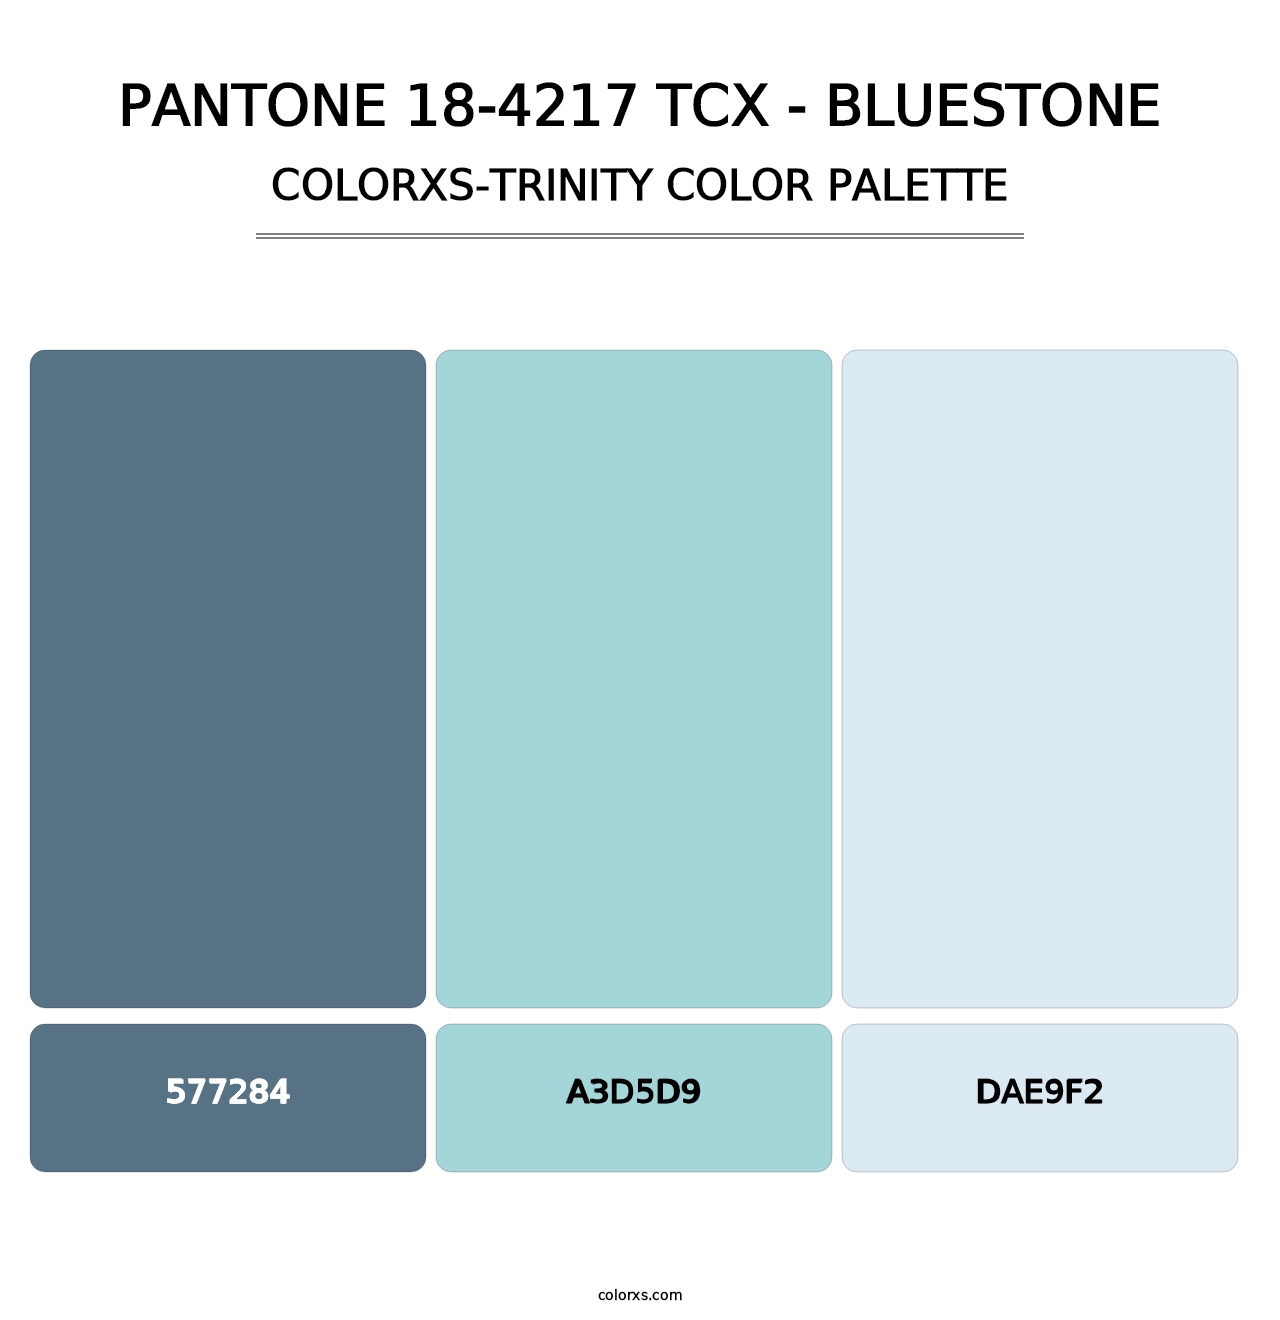 PANTONE 18-4217 TCX - Bluestone - Colorxs Trinity Palette